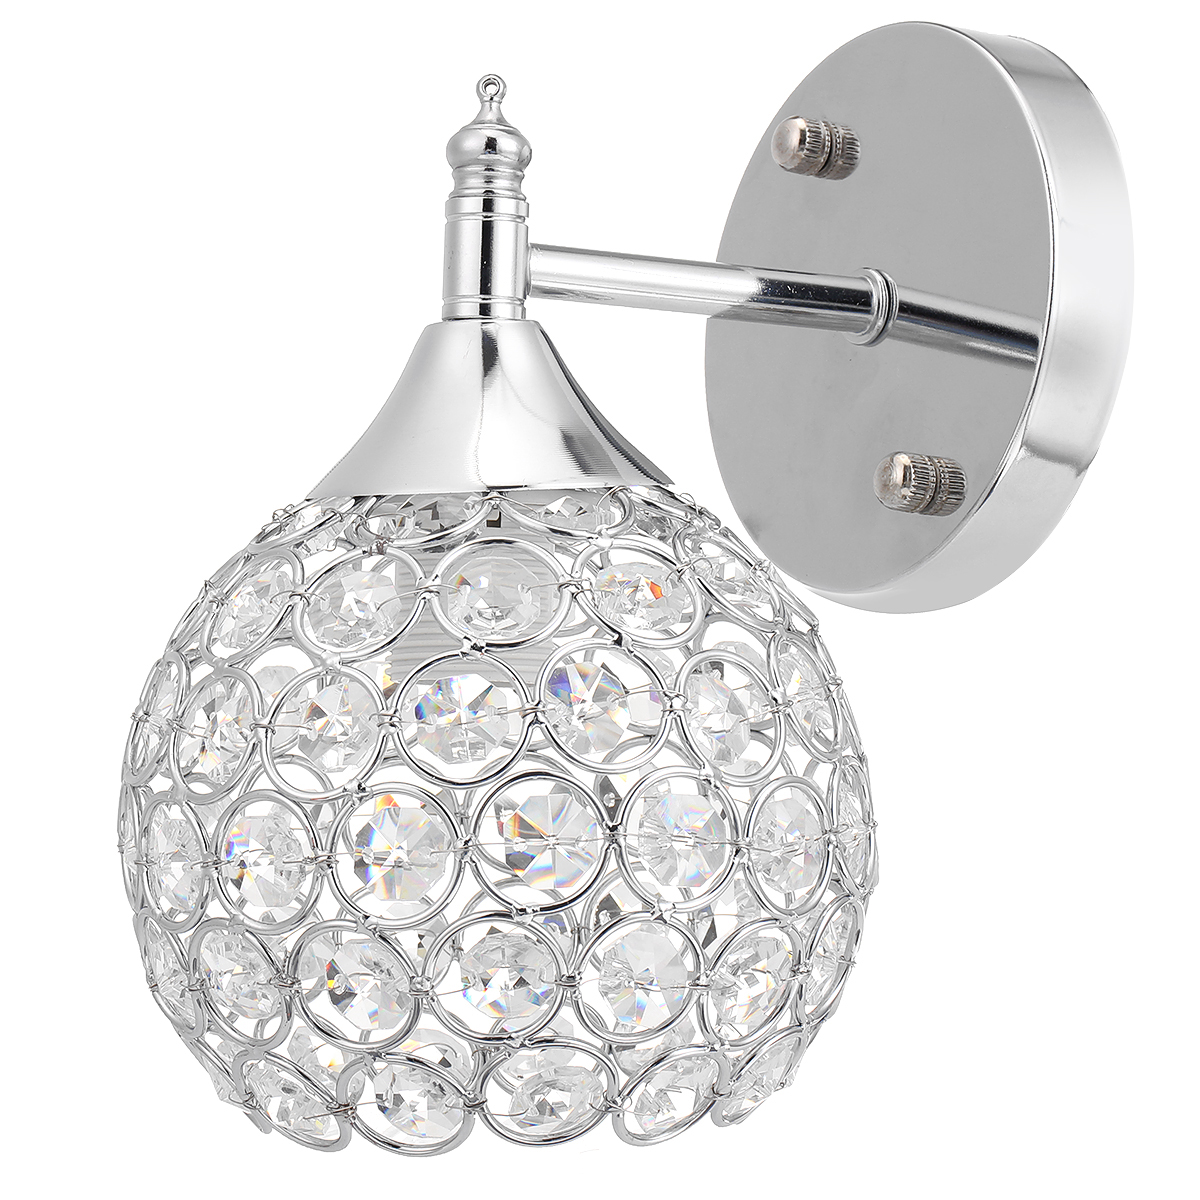 Wall-Lamp-Indoor-Lighting-Wall-Lamp-Crystal-Lights-Decoration-Bedside-Wall-Sconce-Sliver-for-Modern--1788217-1